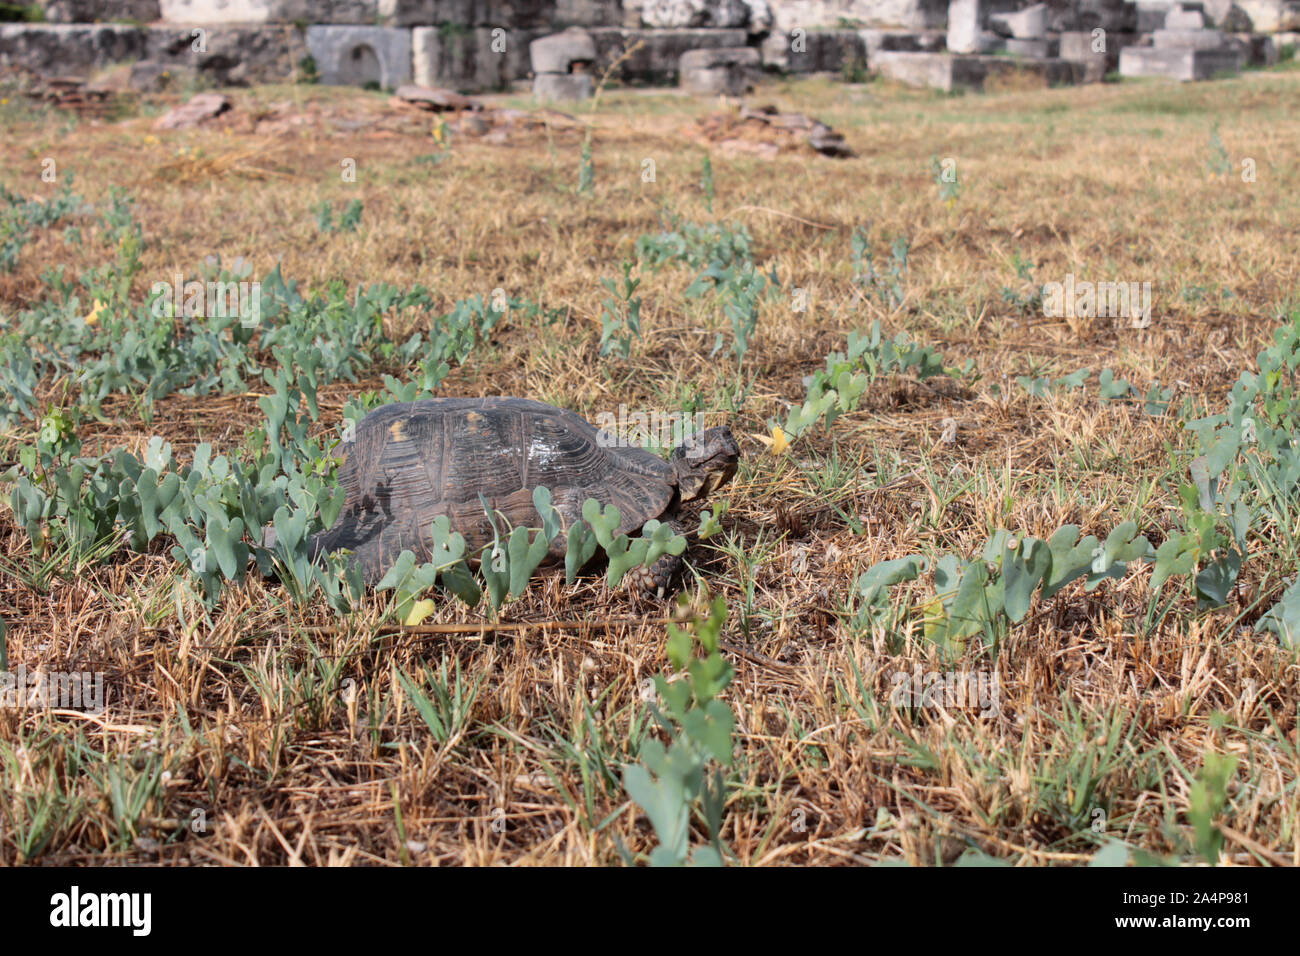 Turtle in greek ruins Stock Photo